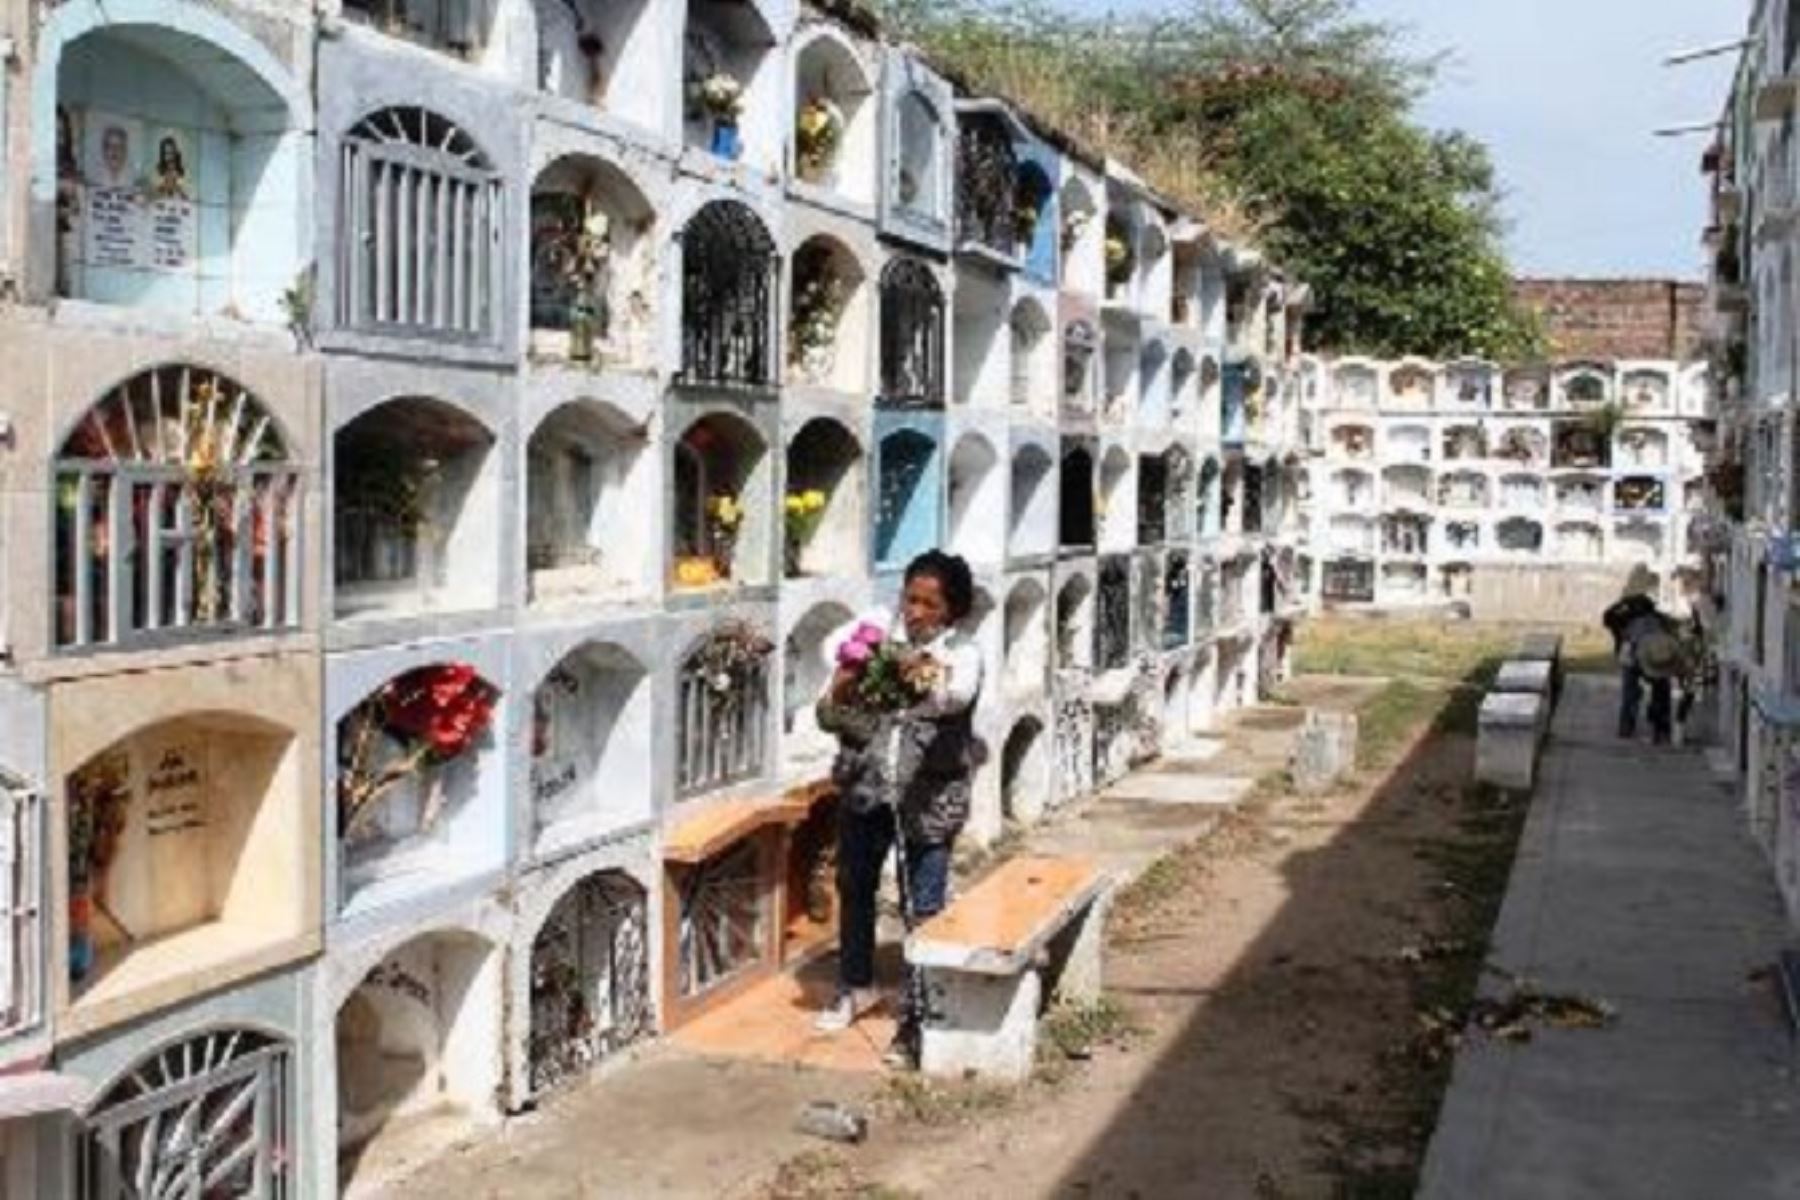 Aconsejan no usar floreros con agua en cementerios para evitar proliferación del dengue